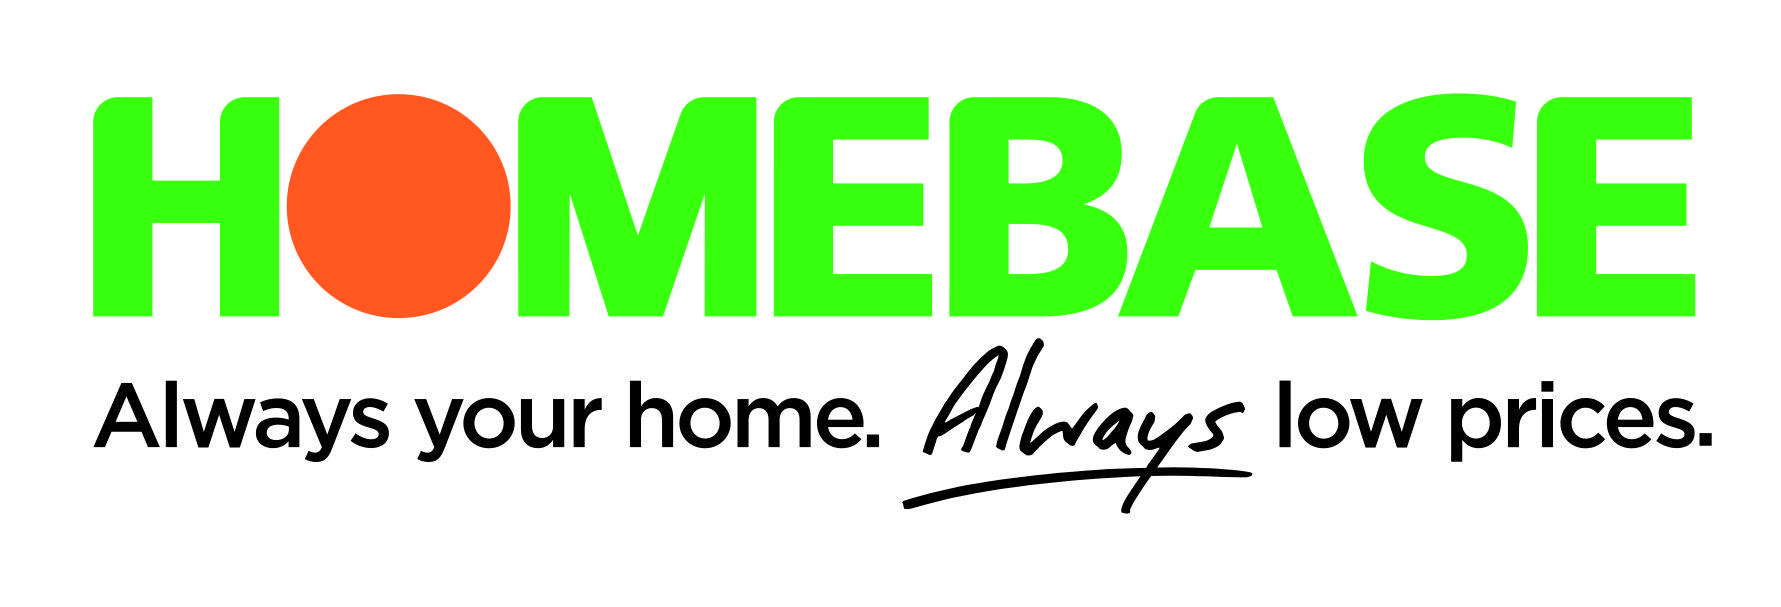 Homebase Logo - Homebase / The Digital Newsroom